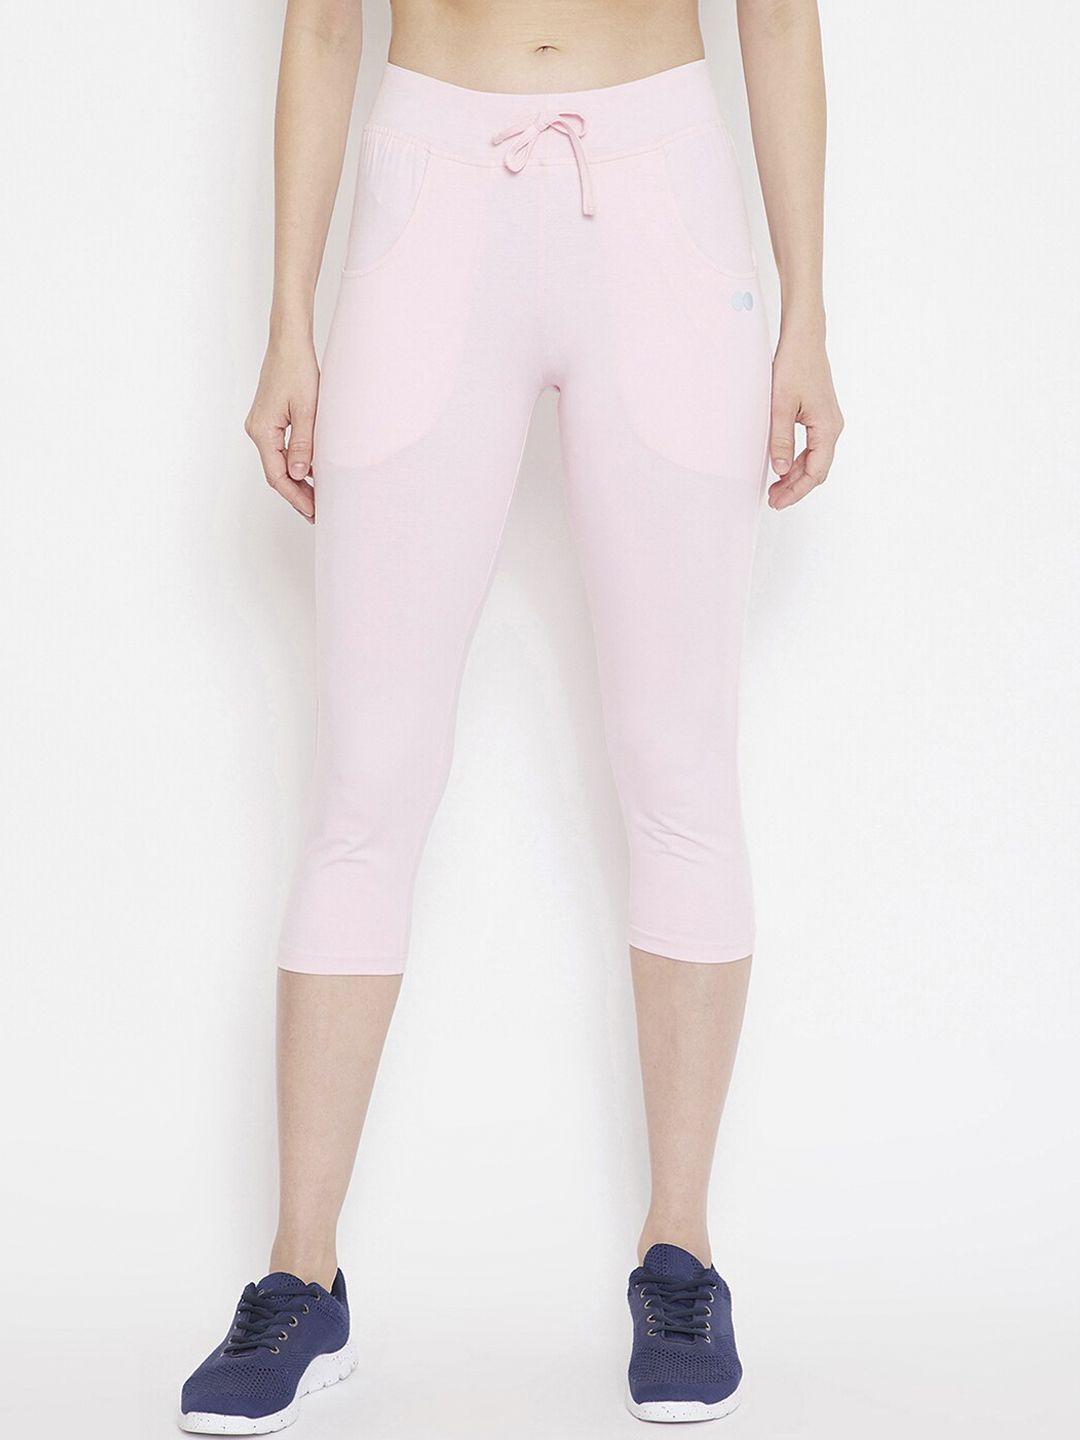 Clovia Women Pink Solid Slim-Fit Active Cotton Capri Tights Price in India